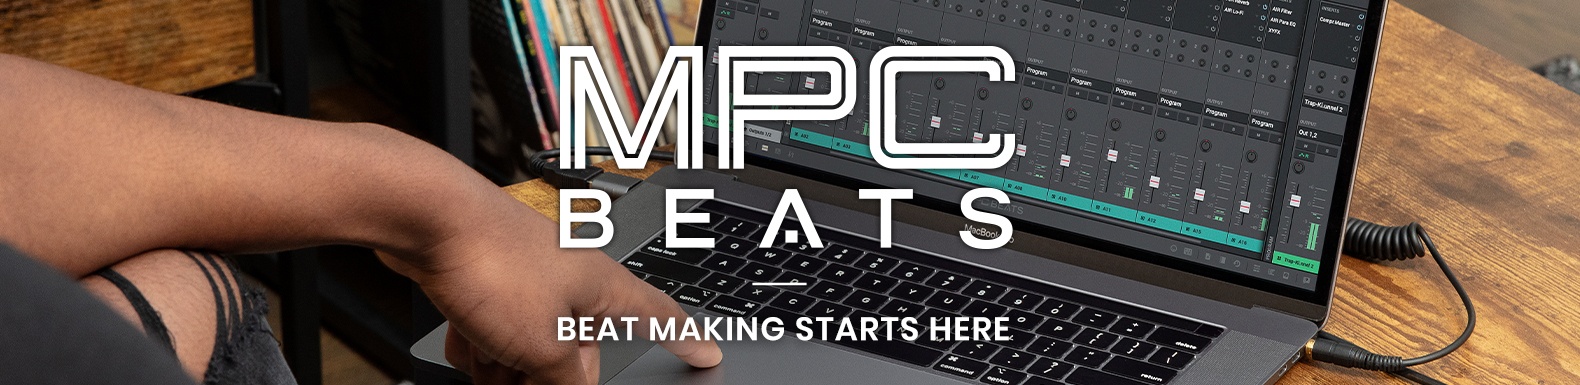 MPC Beats is Akai’s free beat making DAW for Mac or PC